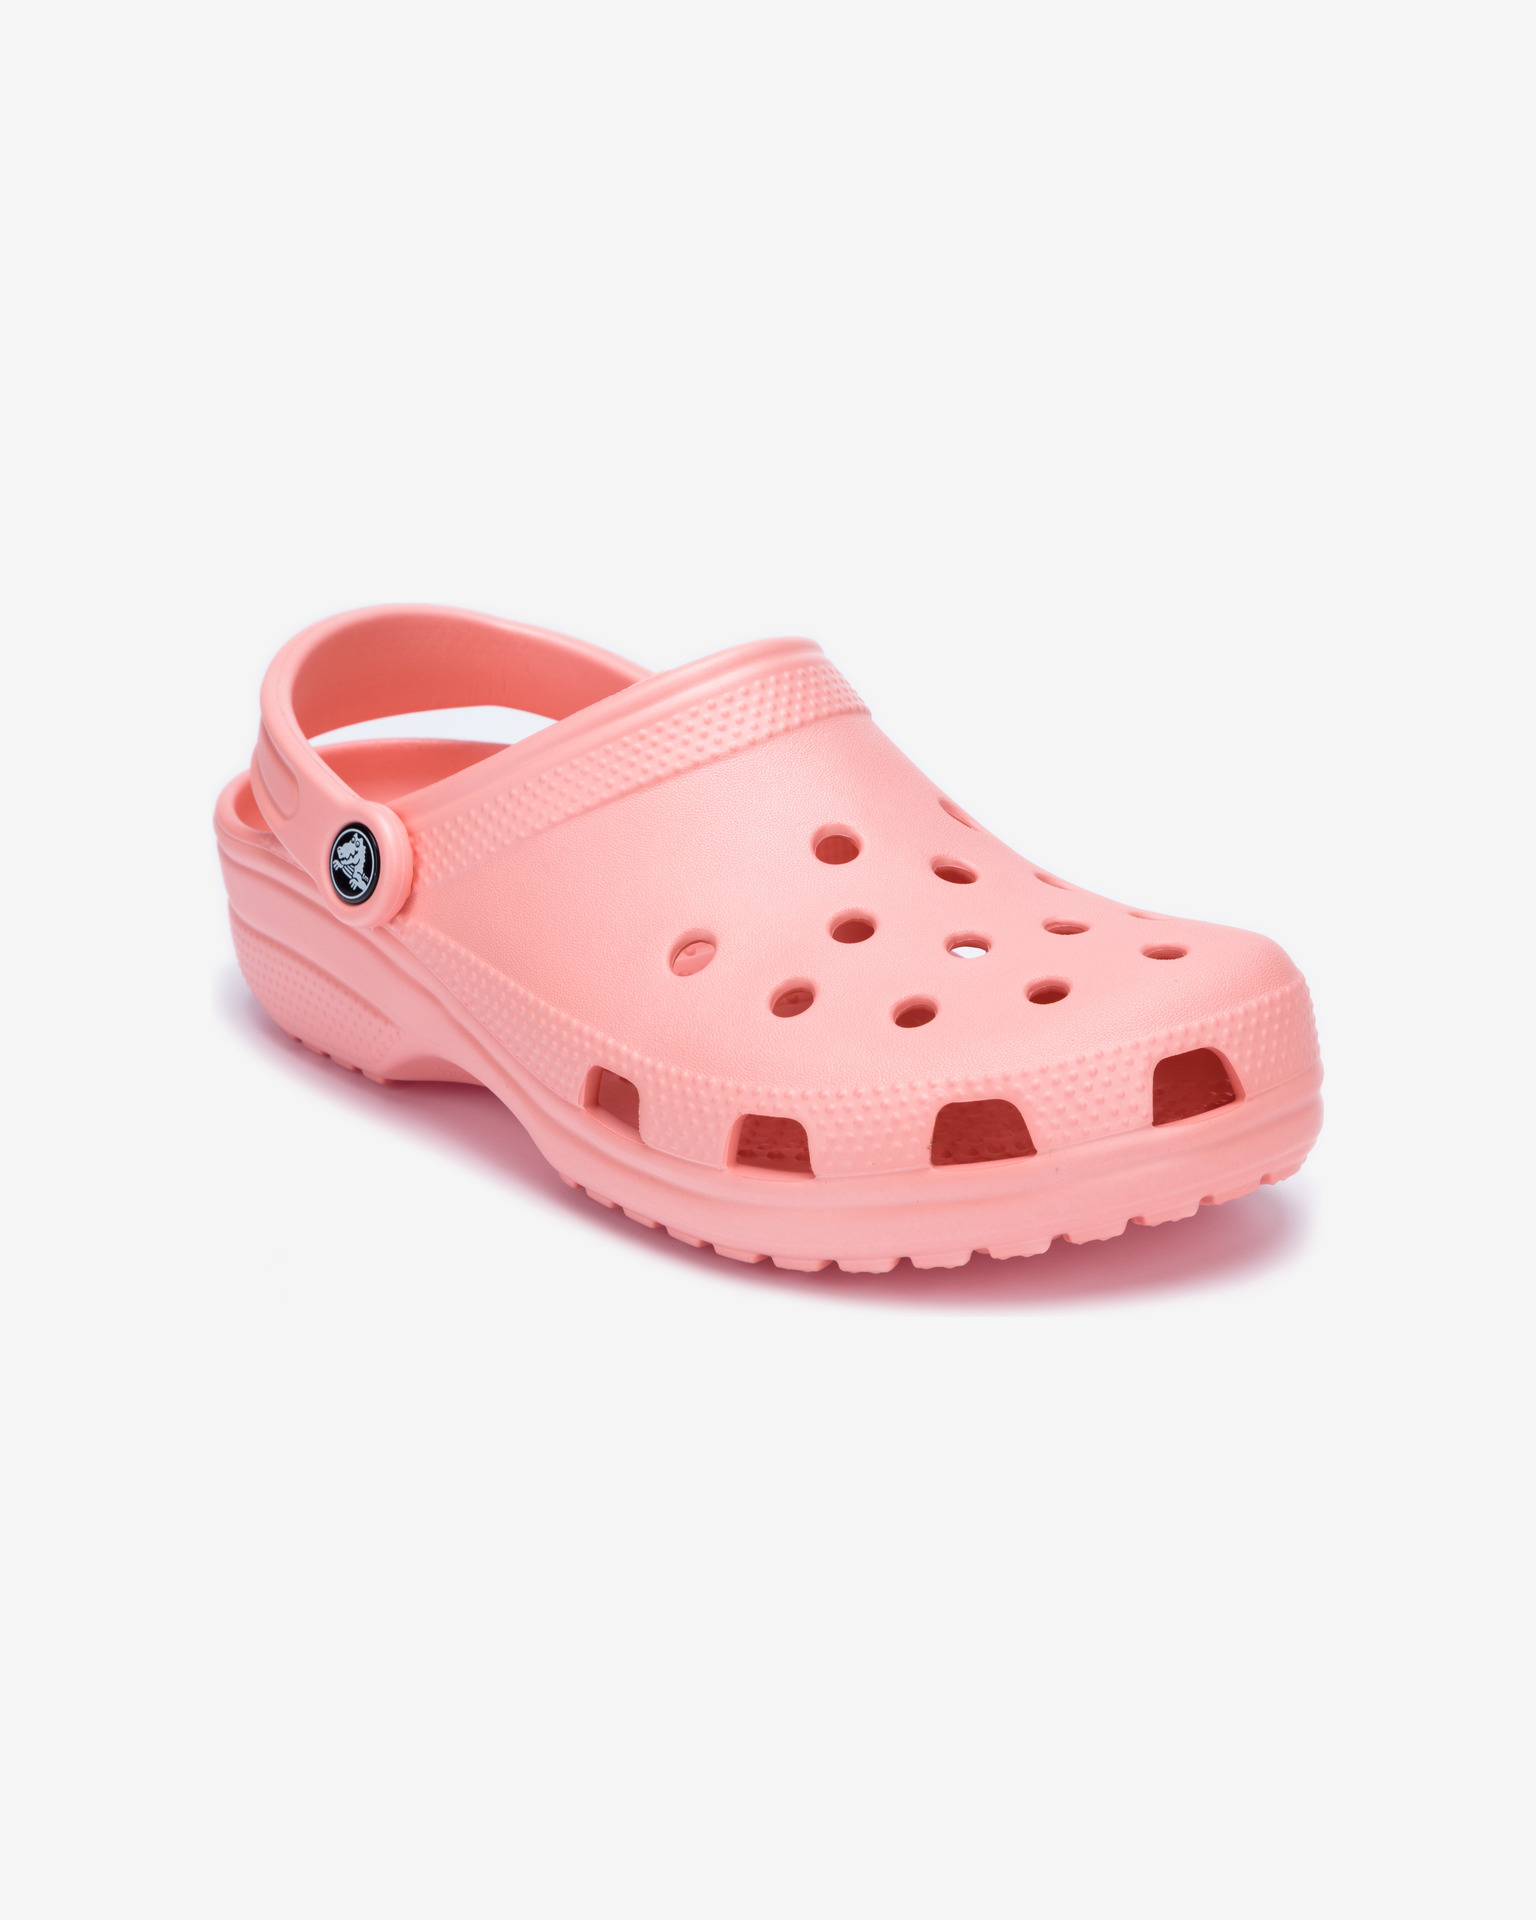 salmon colored crocs